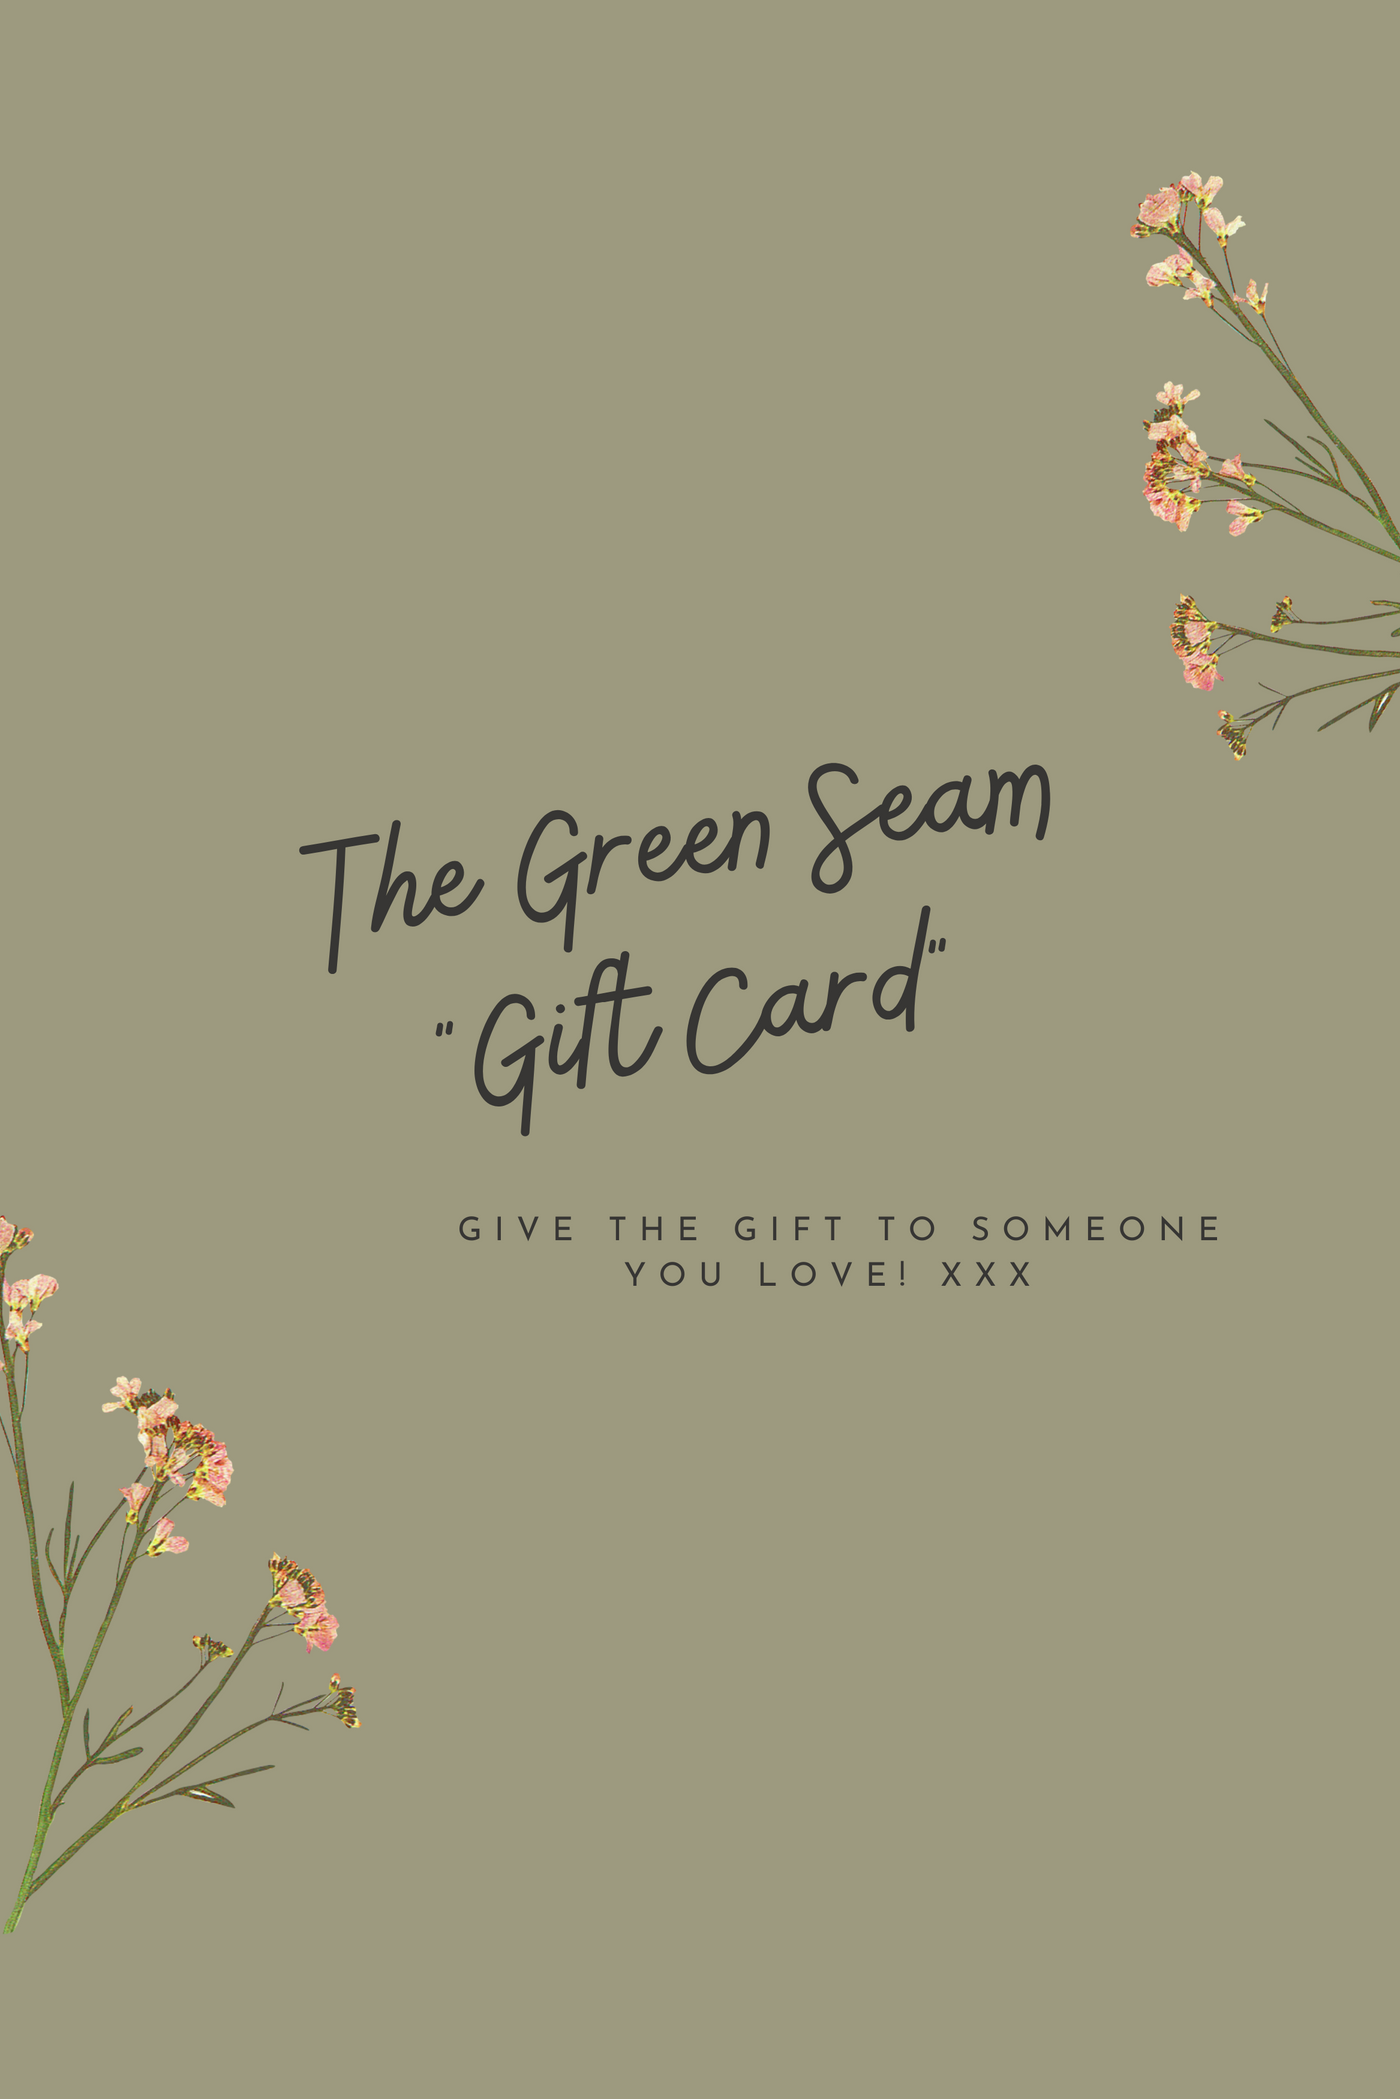 The Green Seam Gift Card